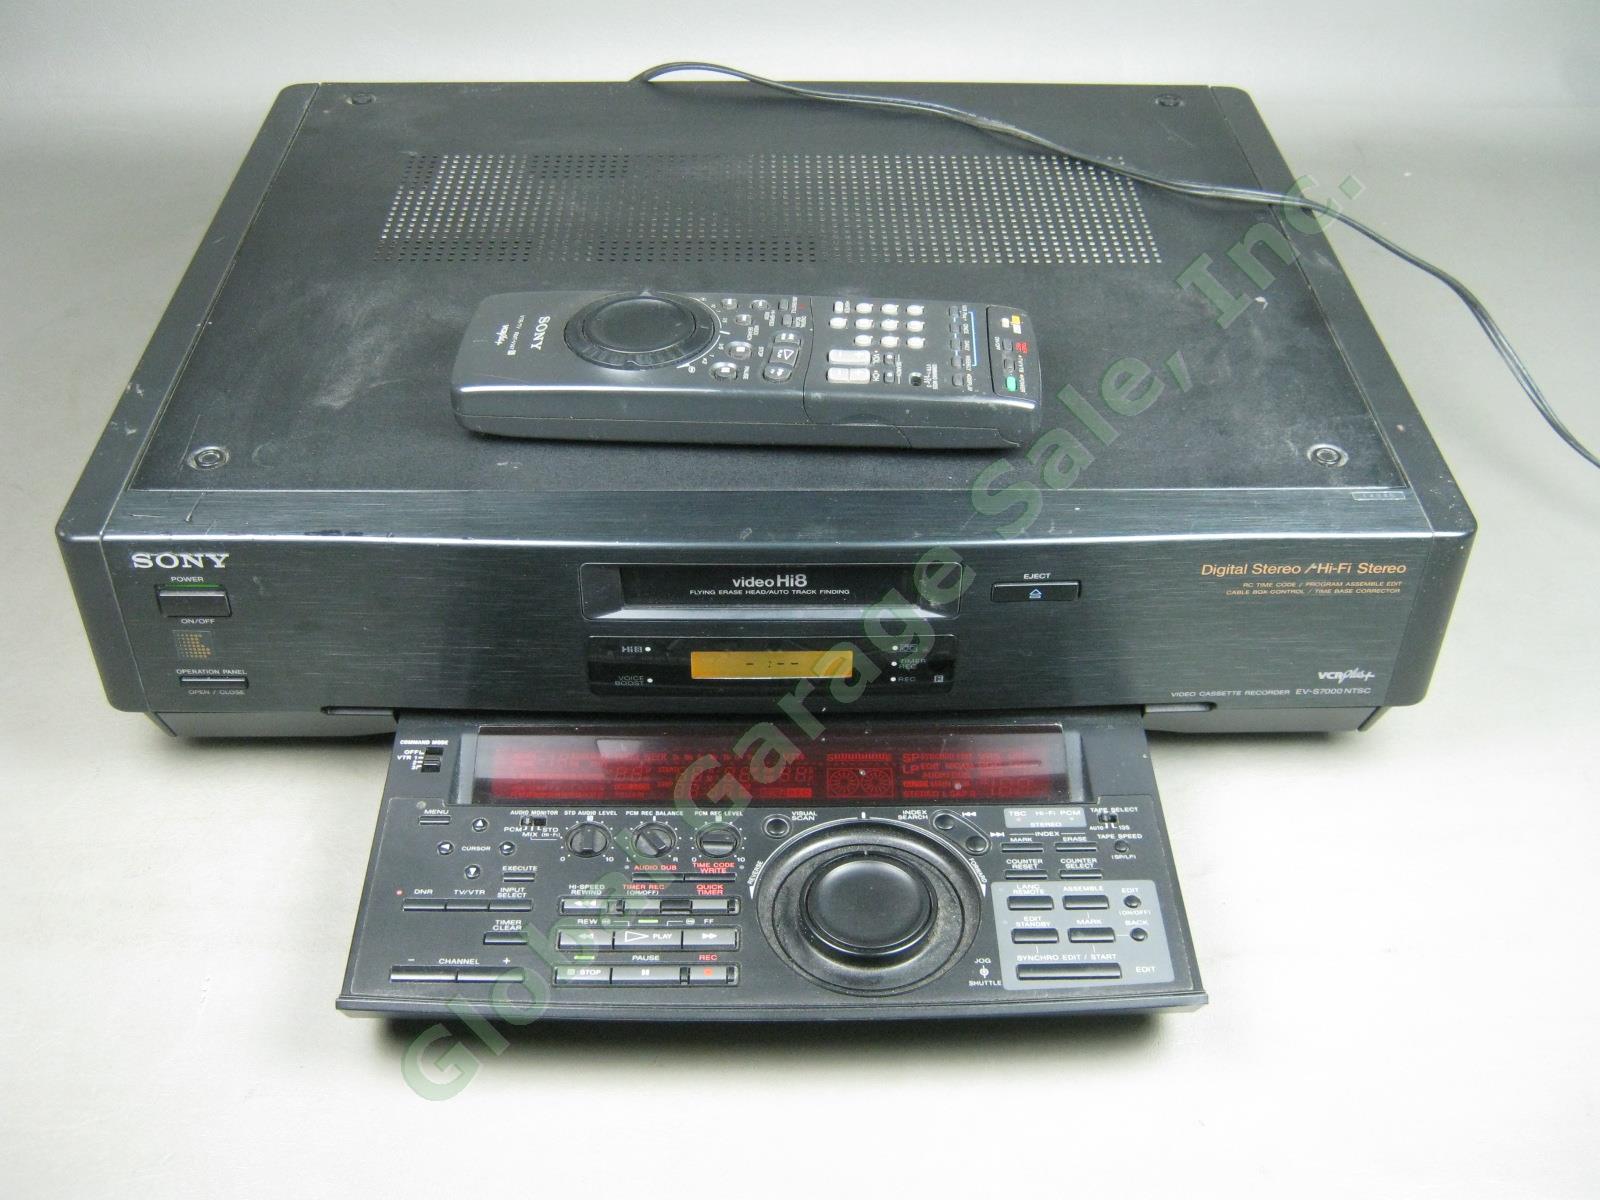 Sony EV-S7000 Hi8 8mm Digital HiFi Editing VCR Player Recorder +Remote Bundle NR